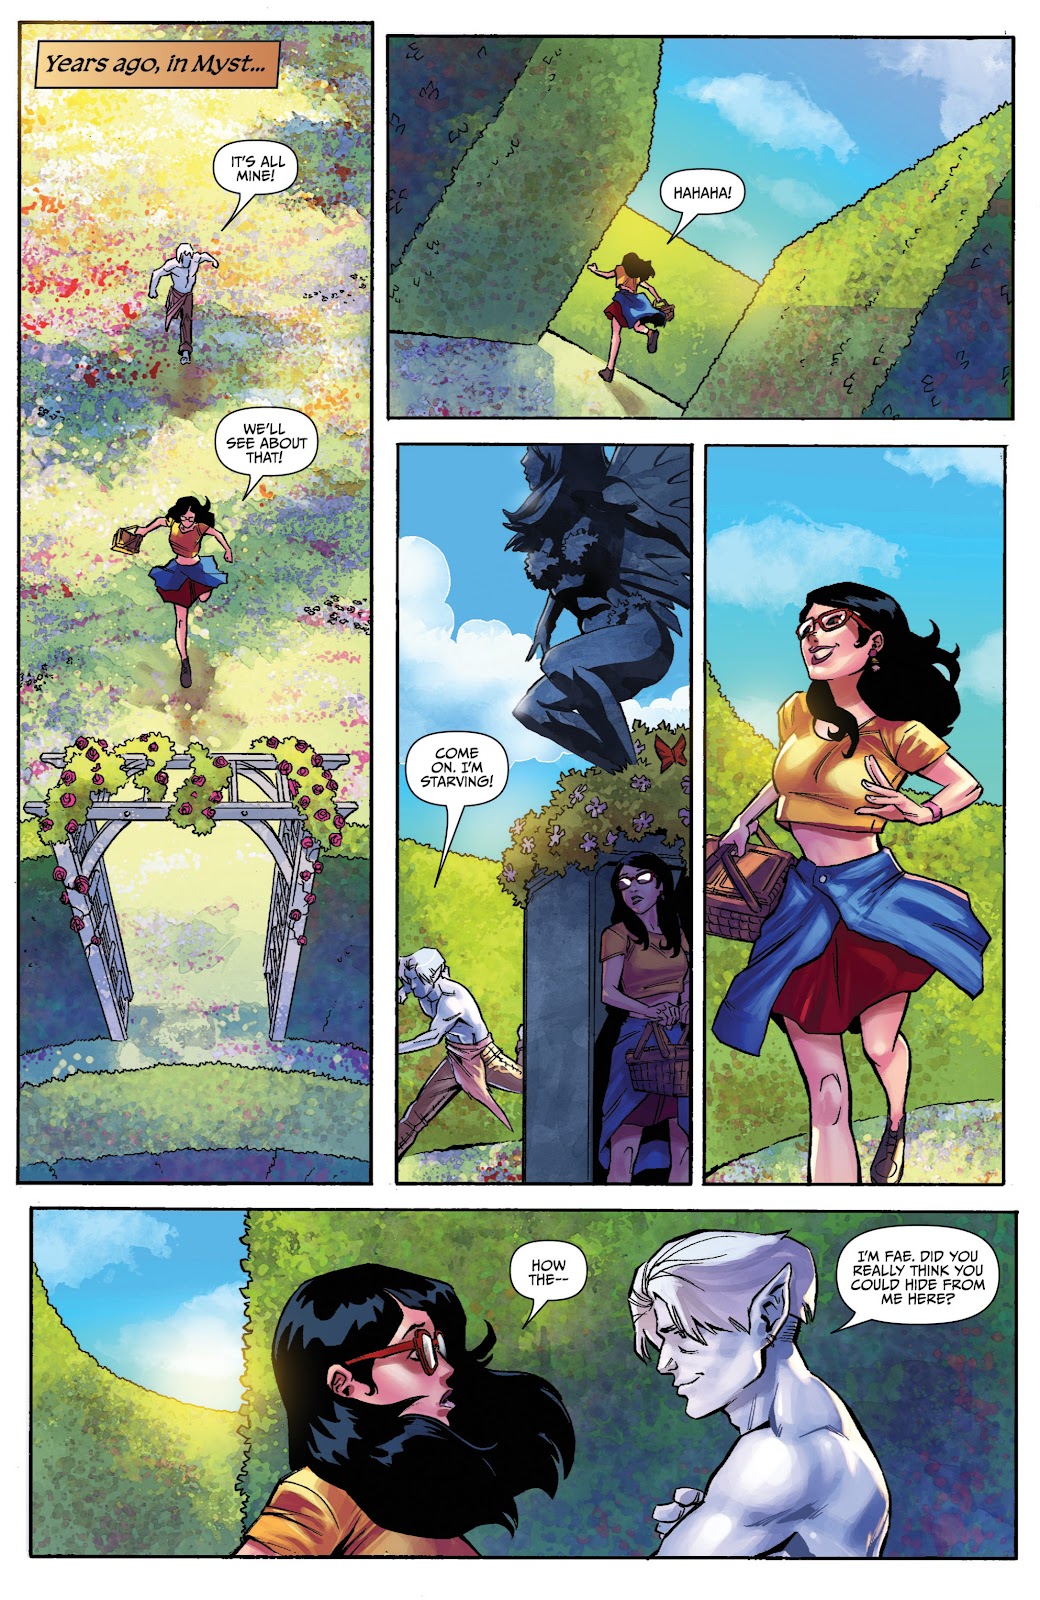 Snow White vs. Snow White issue 2 - Page 3